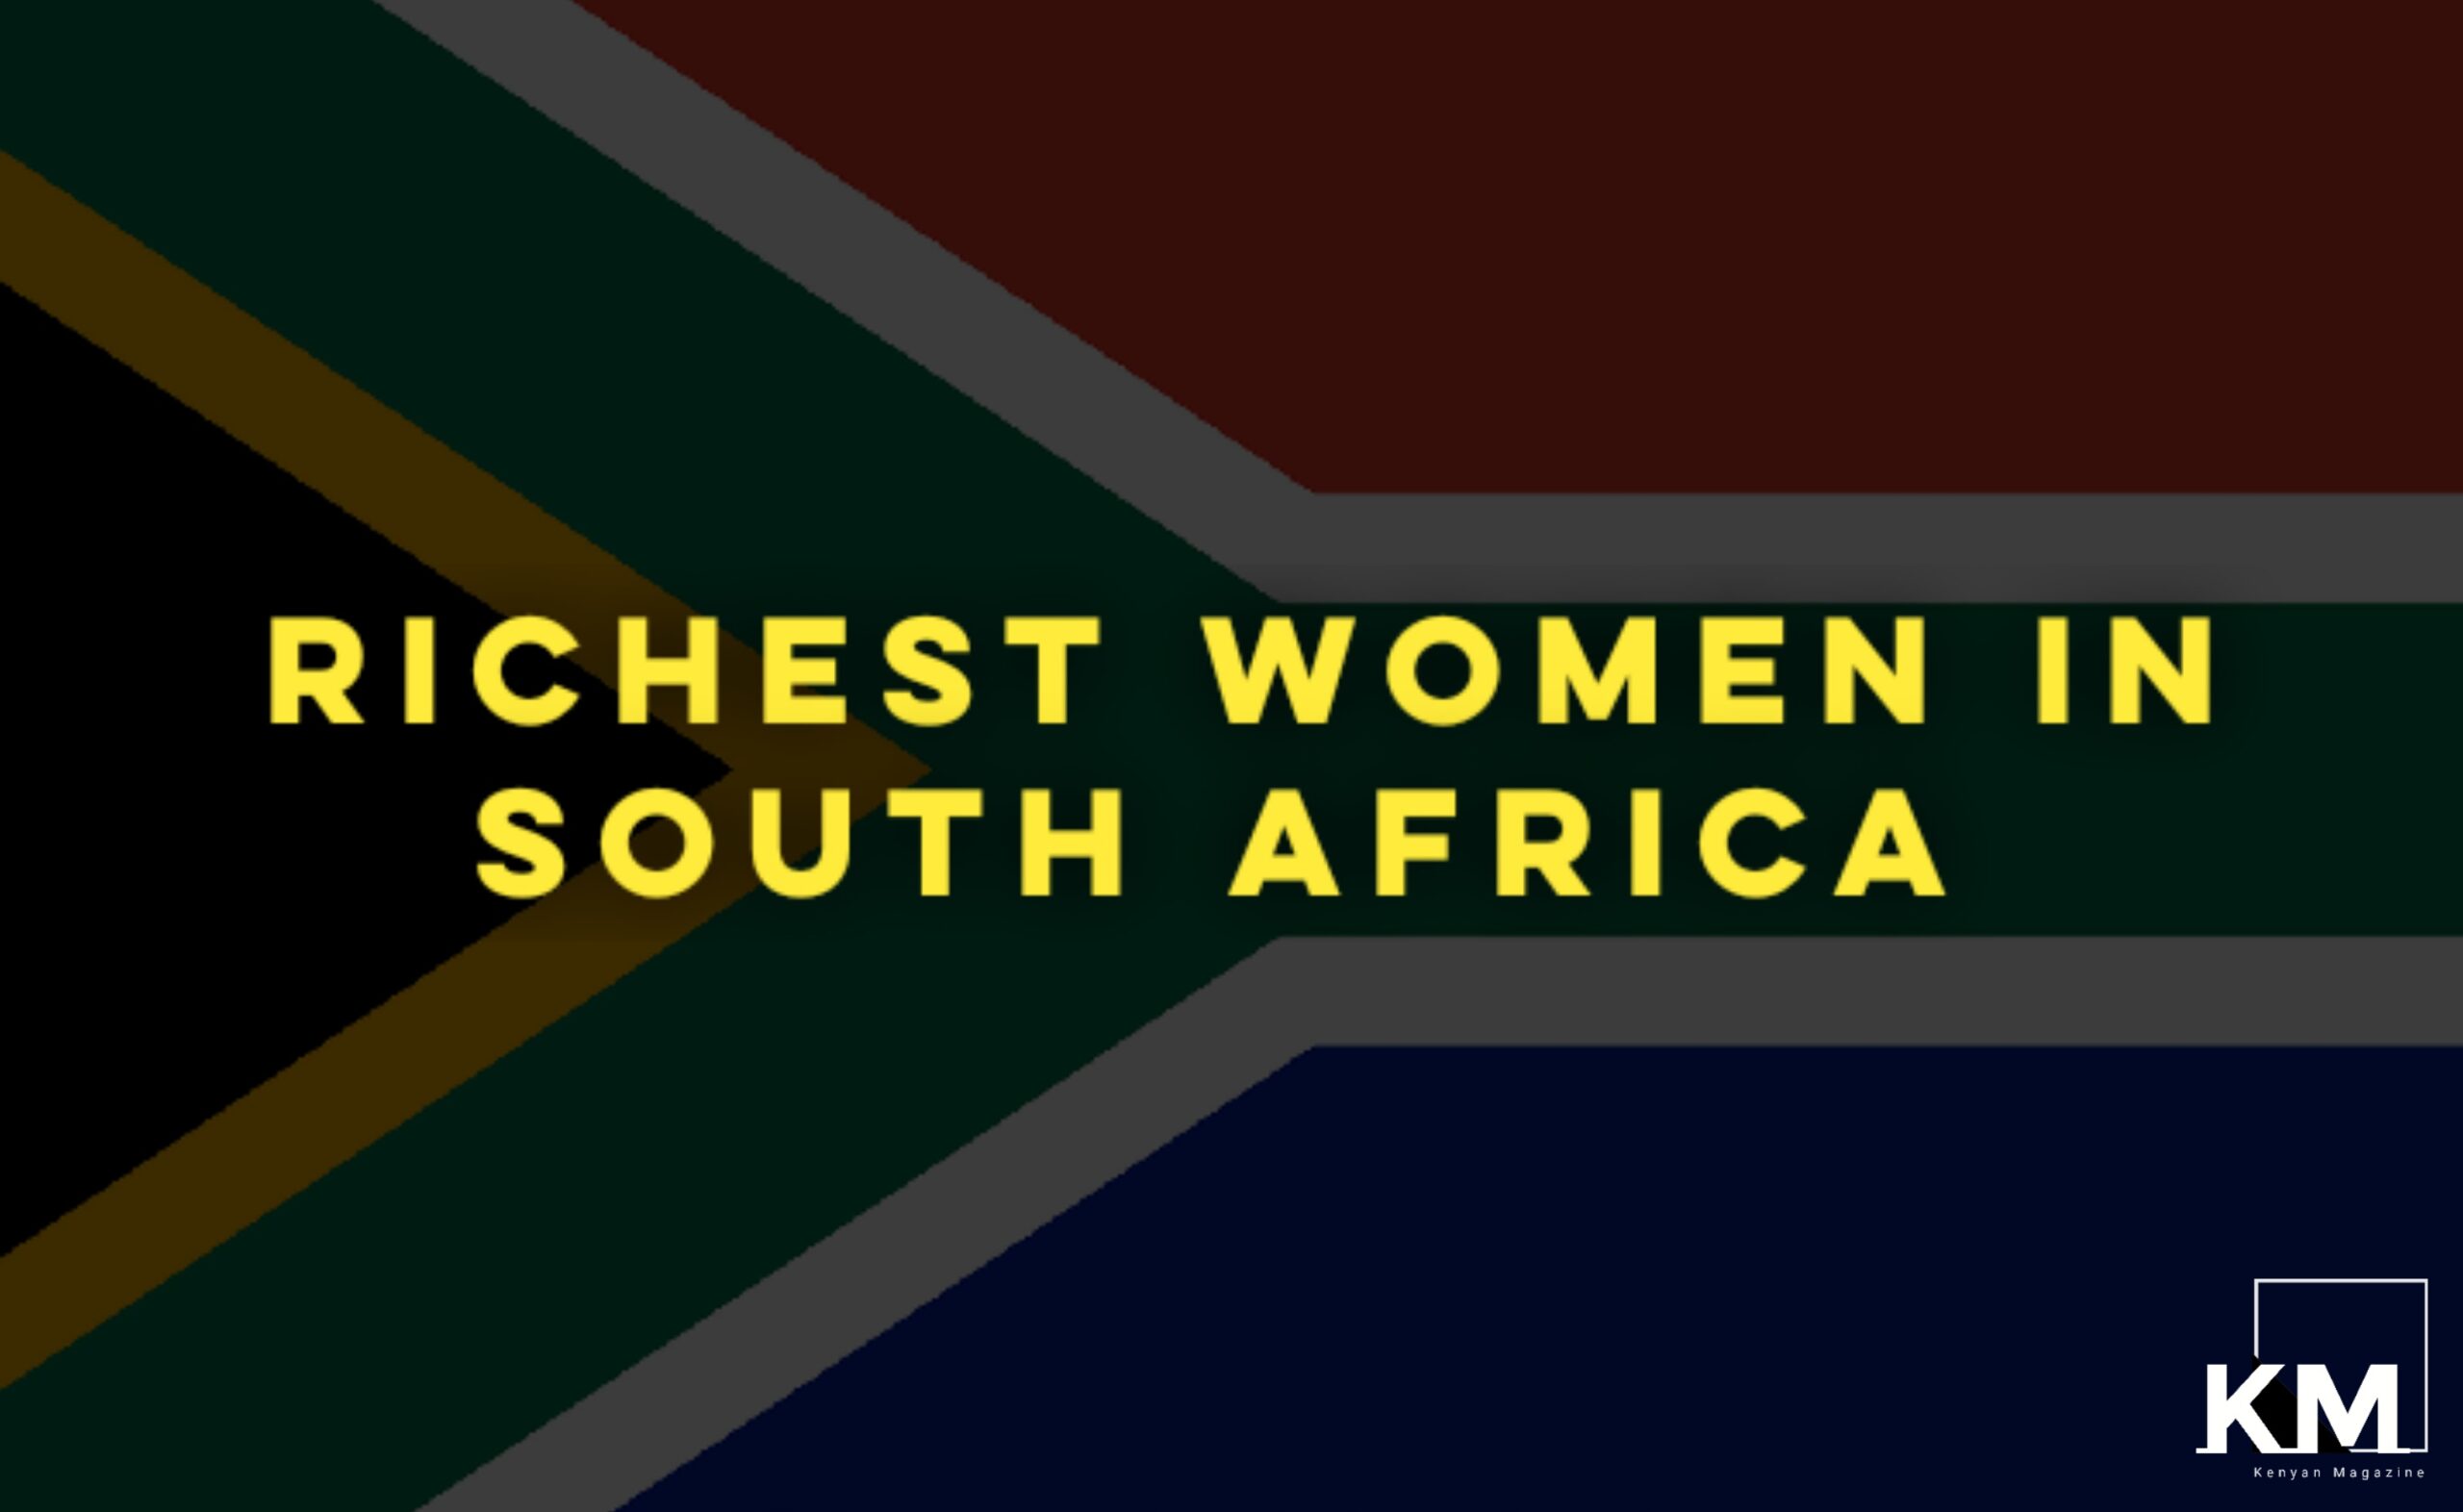 Richest women in South Africa